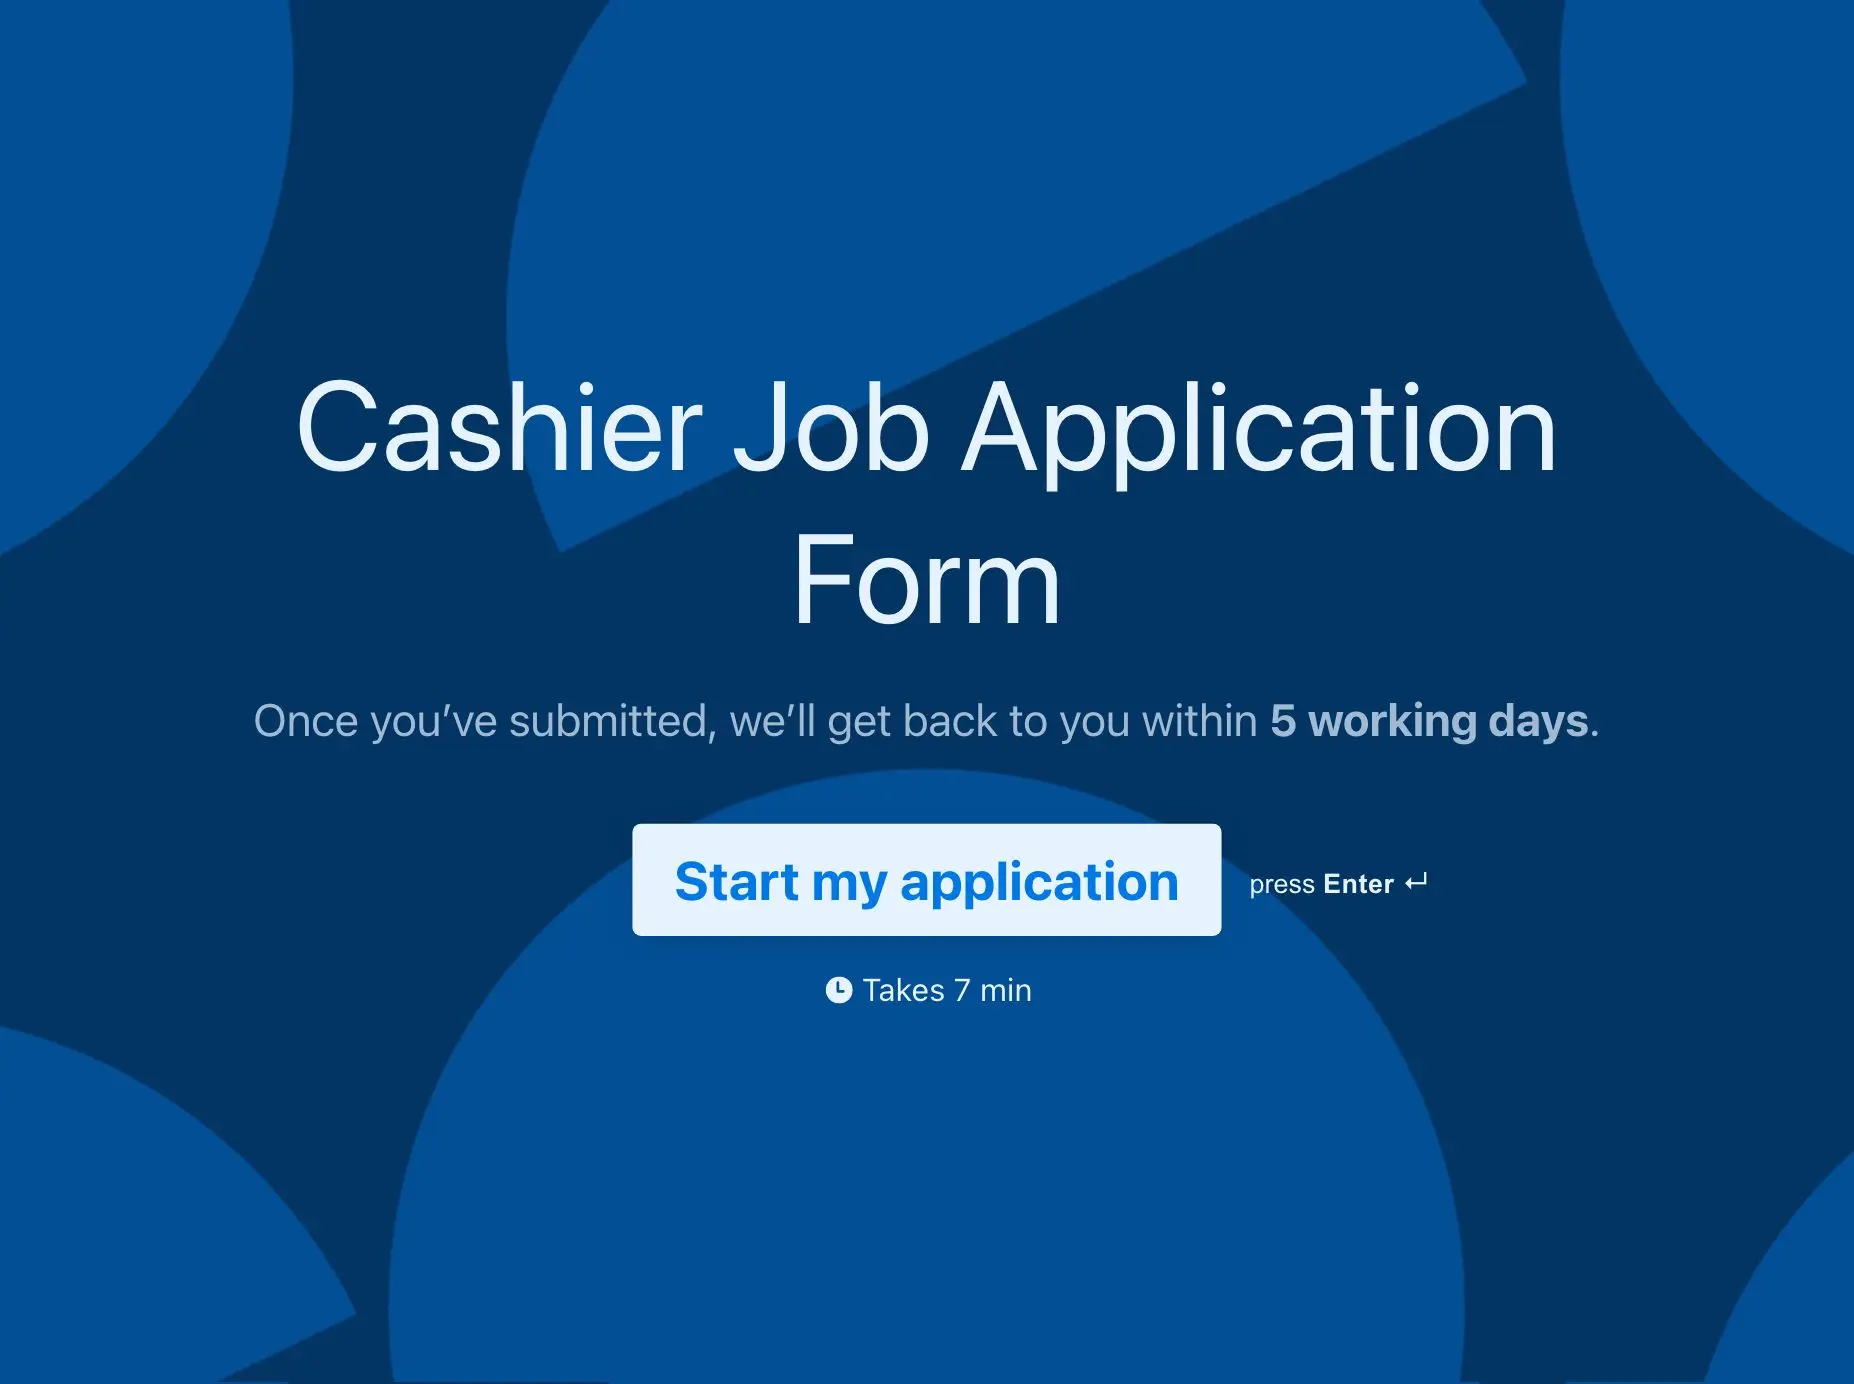 Cashier Job Application Form Template Hero